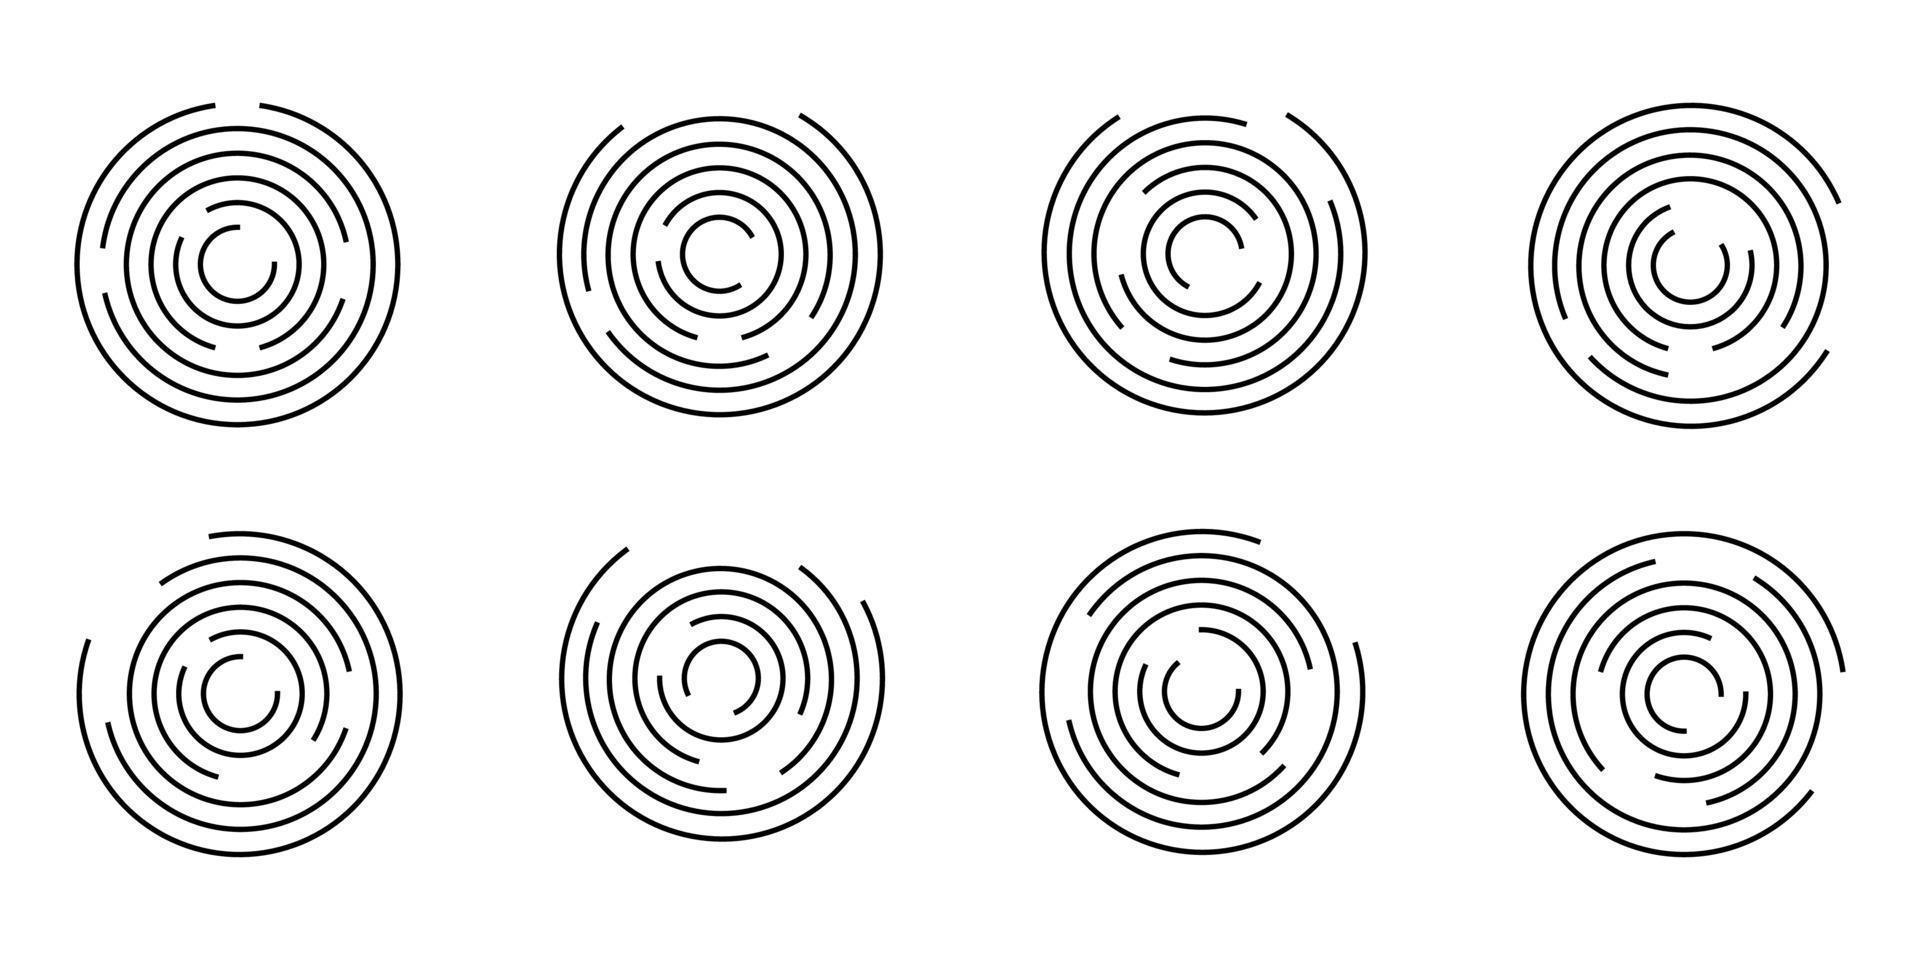 elemento de vetor geométrico de círculo concêntrico